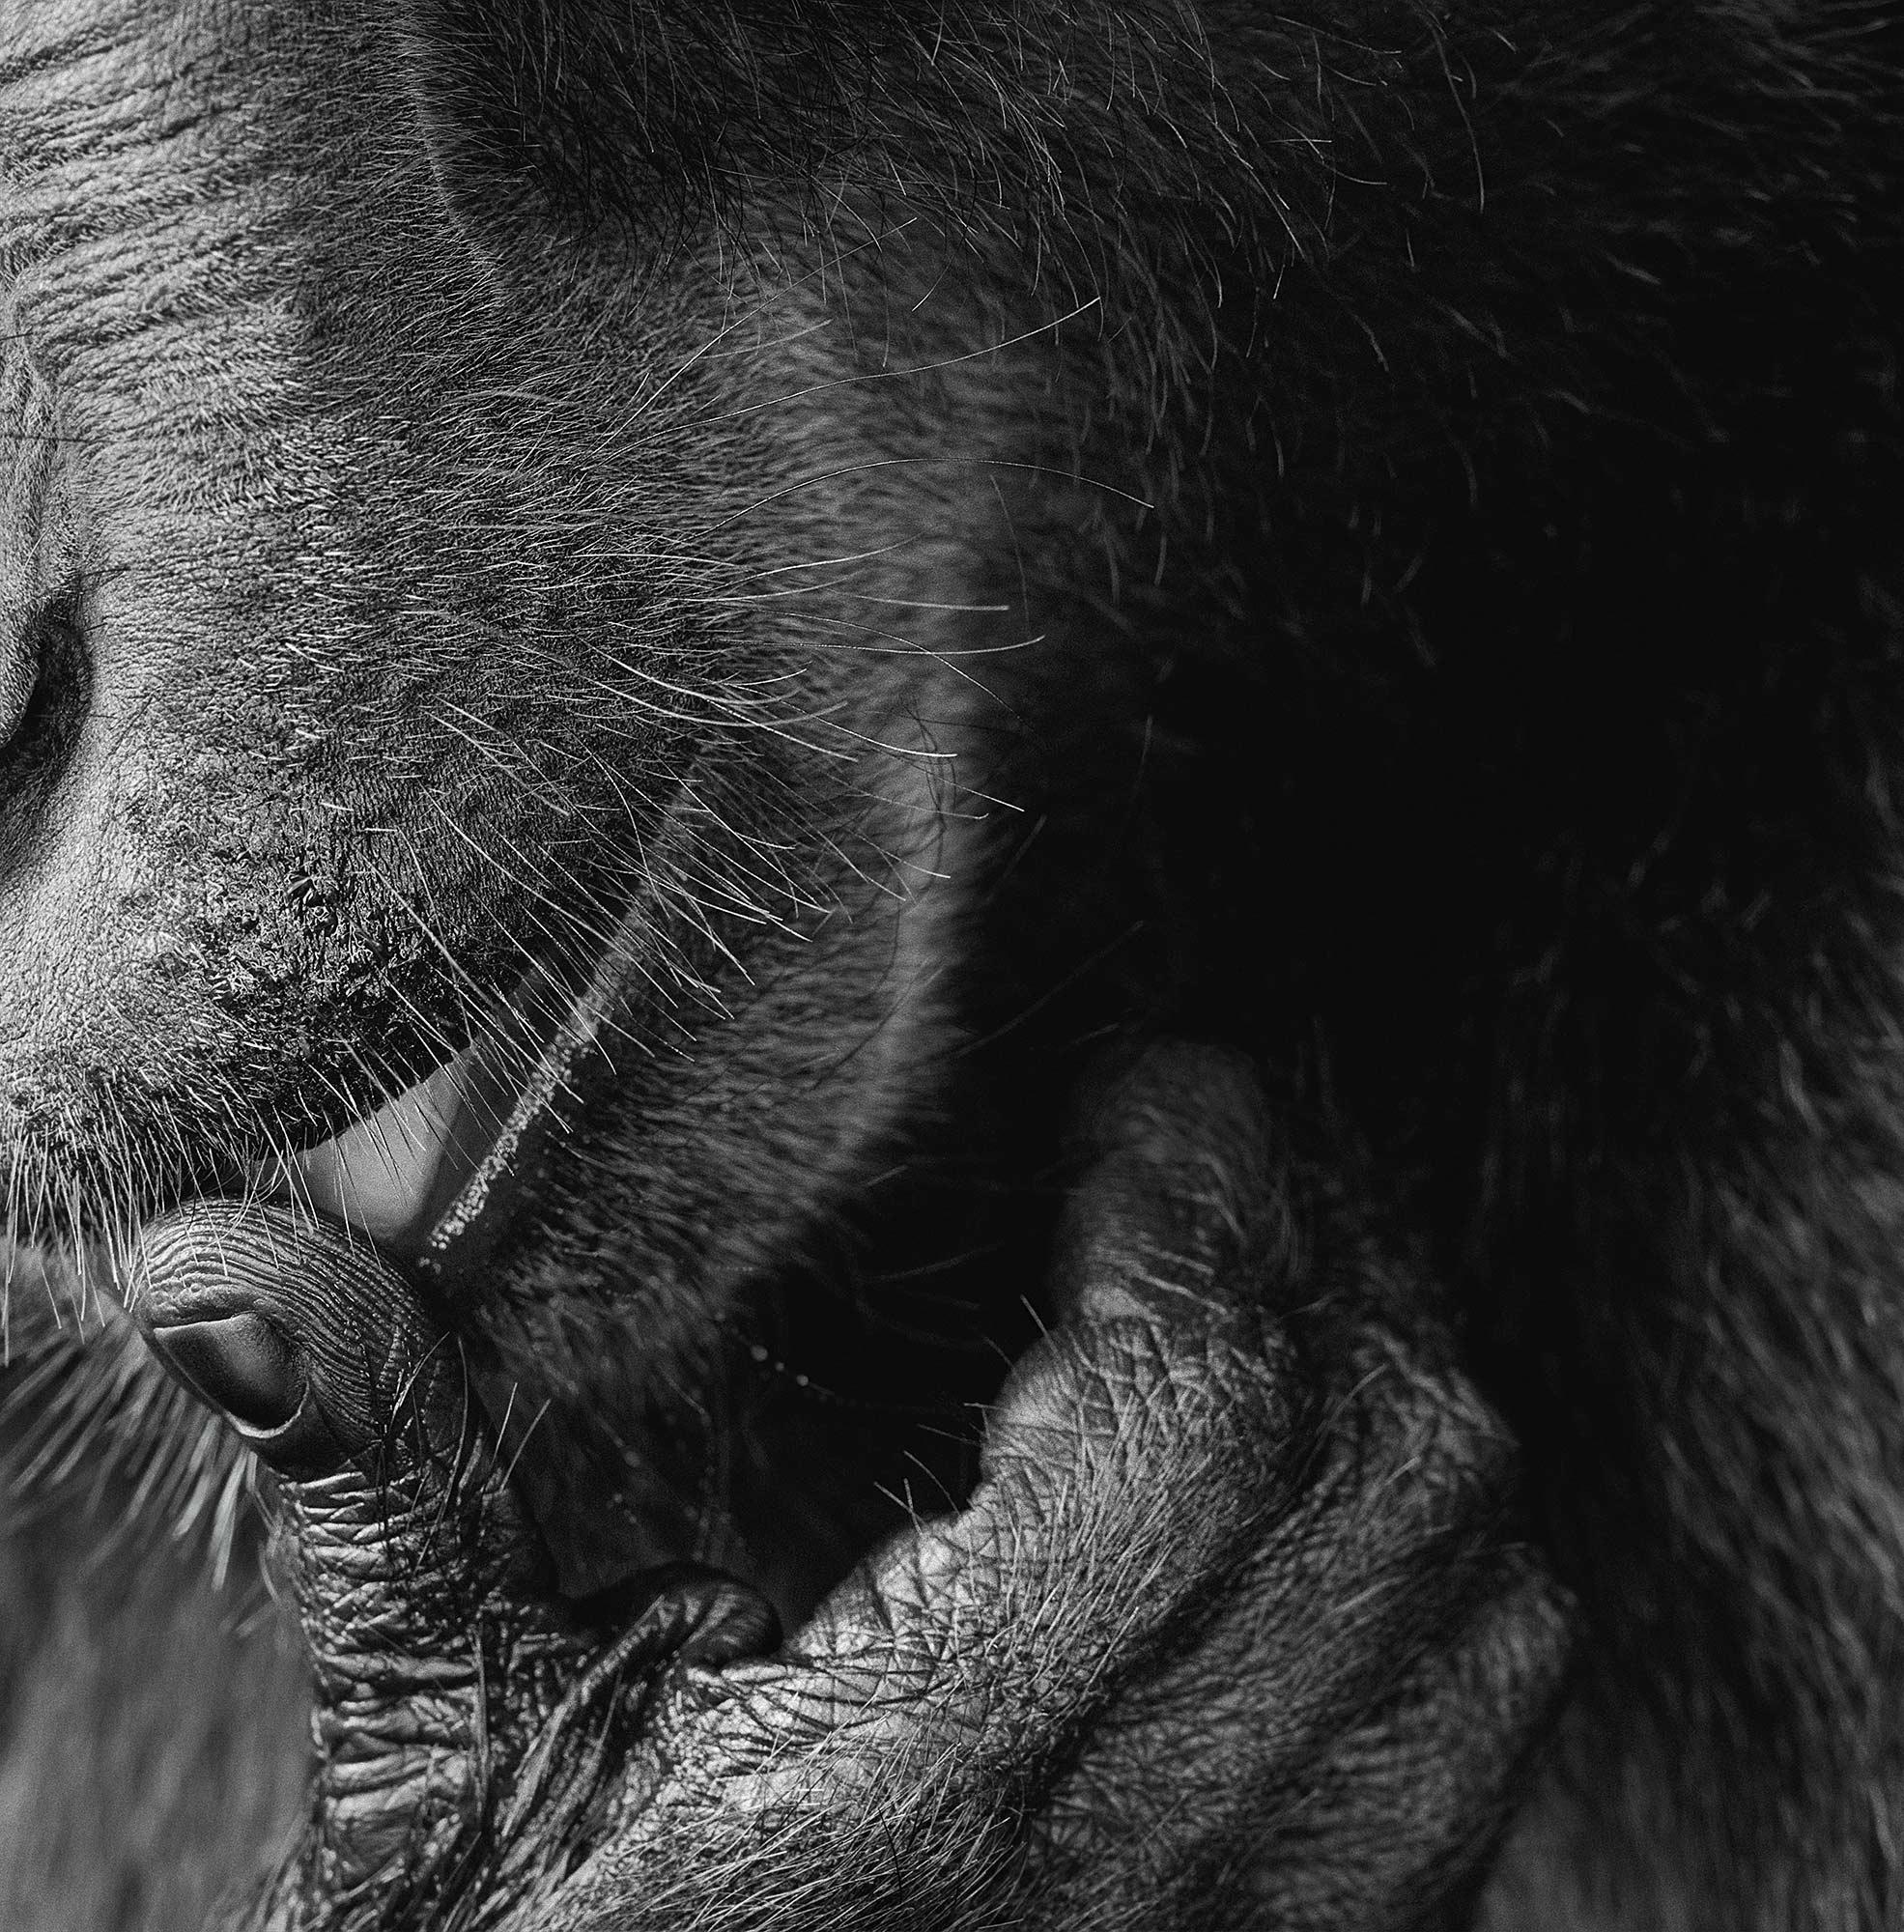 Monkey Licking - Contemporary British Art, Animal Photography, Tim Flach